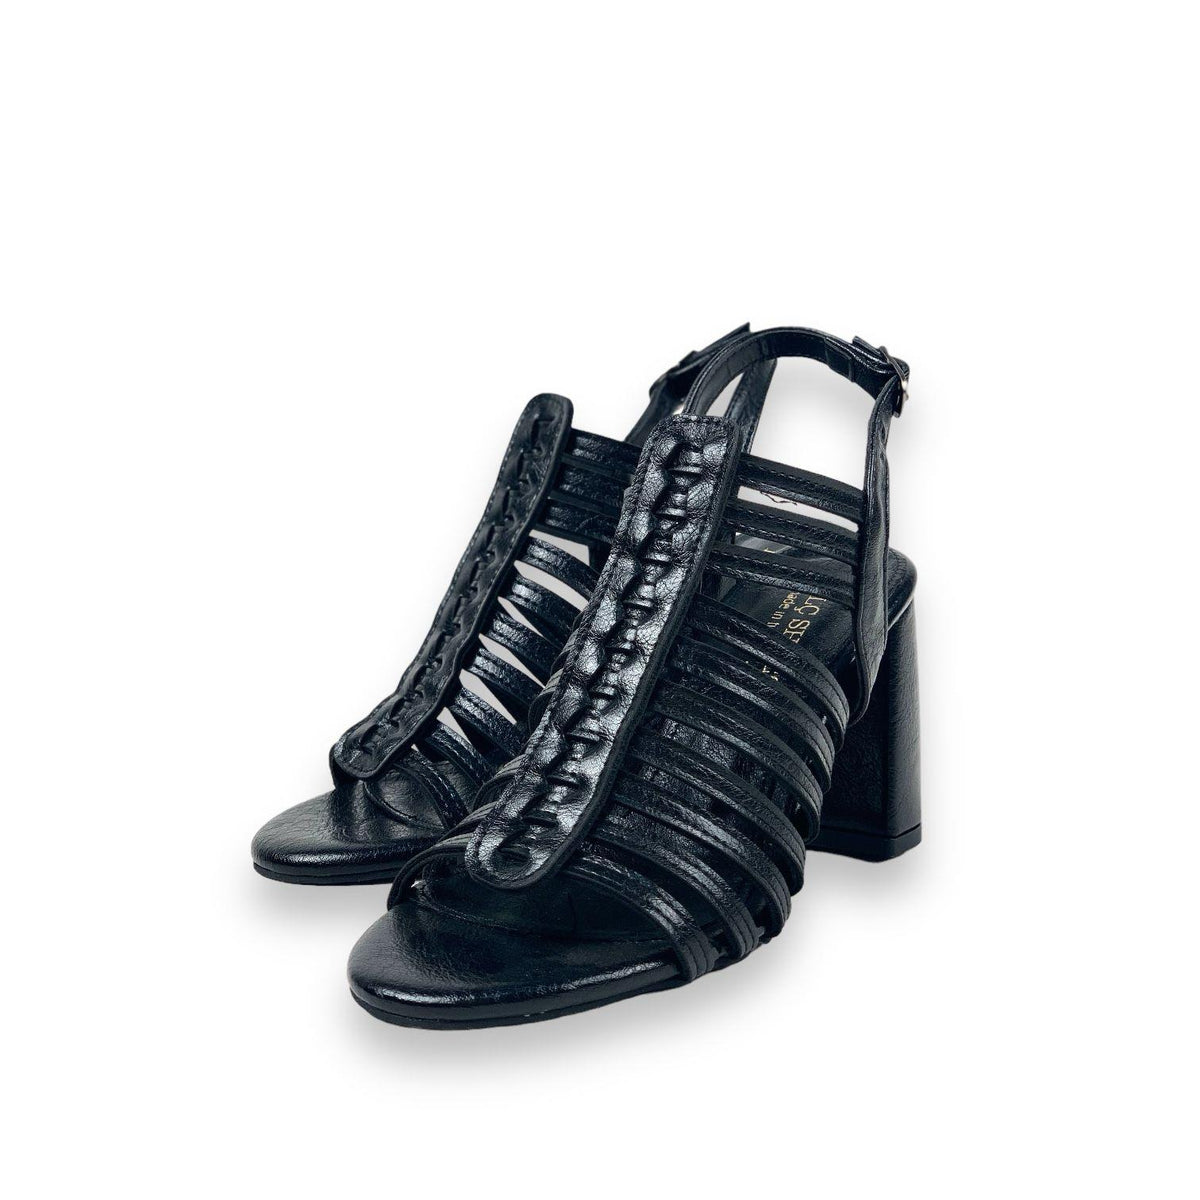 Women's Pert Black Thick High Heel Shoes Sandals 9 cm - STREETMODE ™